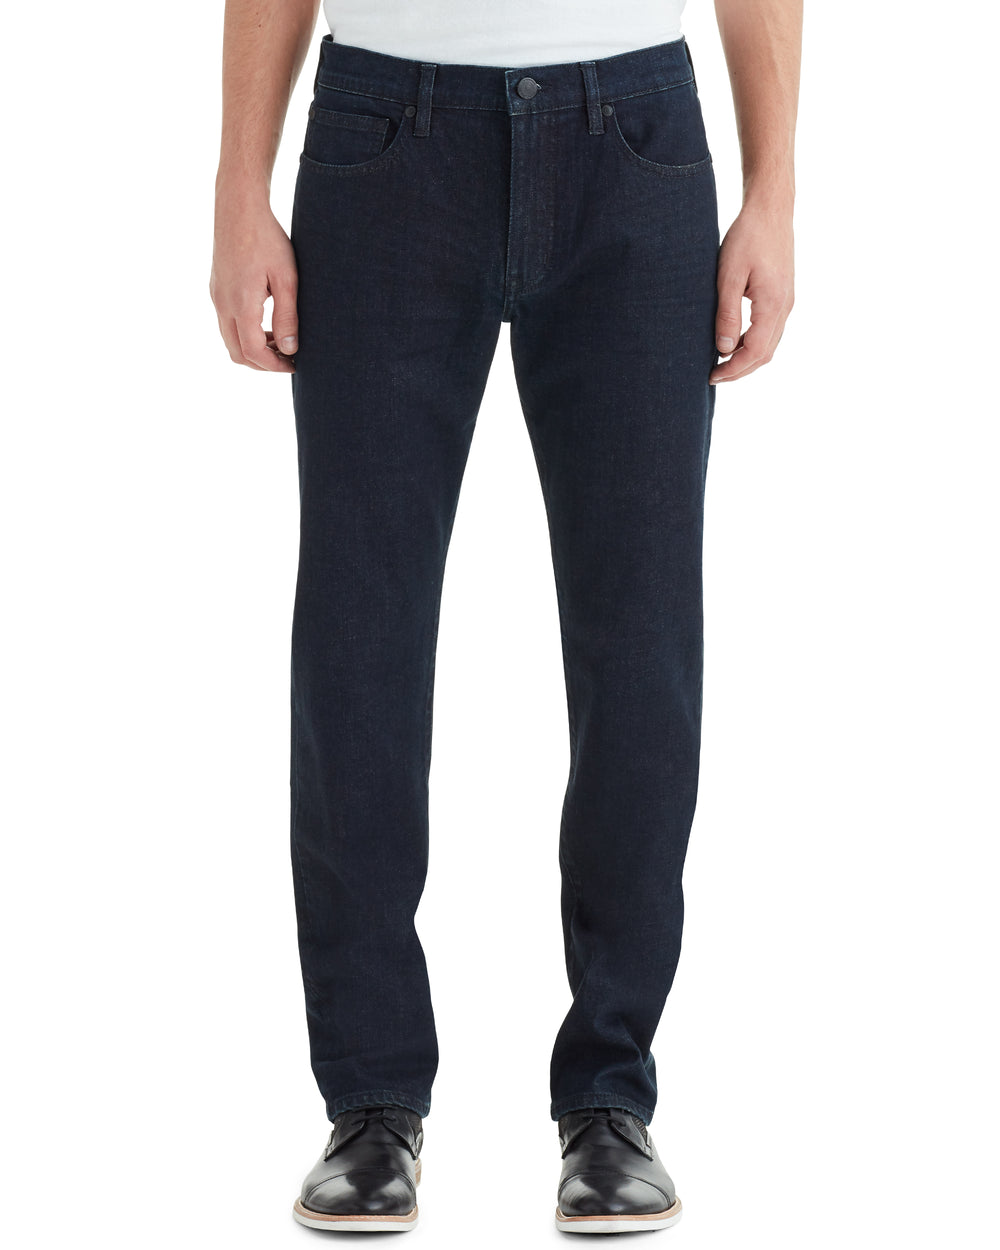 Men's Slim Fit Jeans, 30 Inseam - Dark Rinse